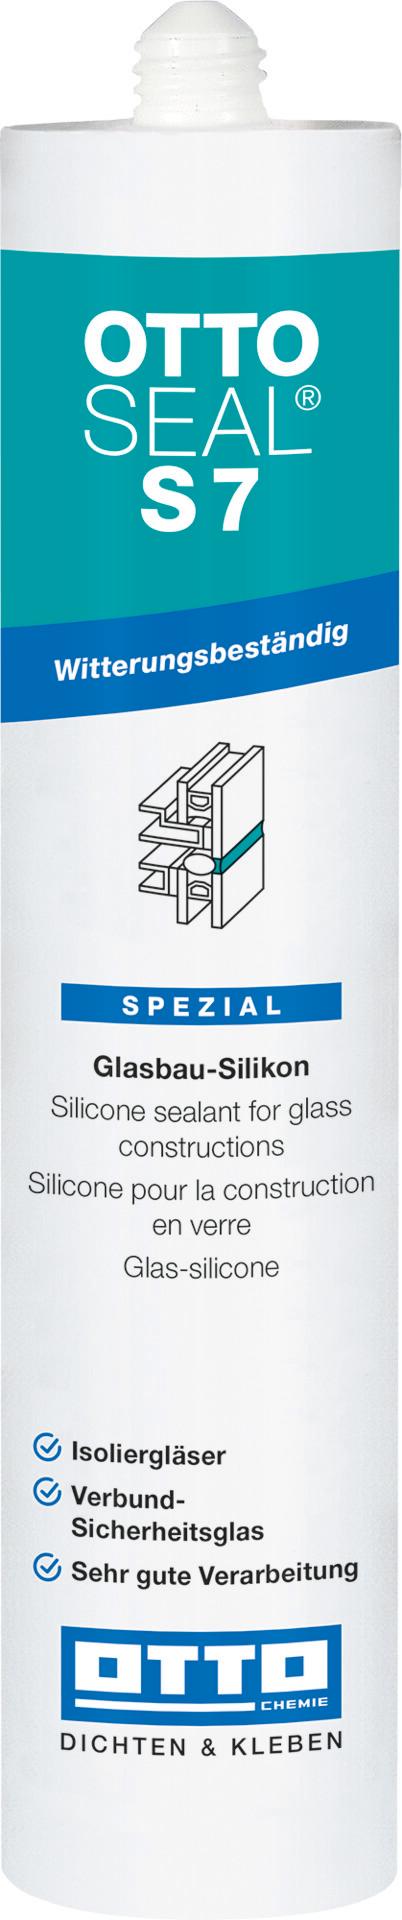 Fasádní silikon OTTOSEAL S7 310 ml